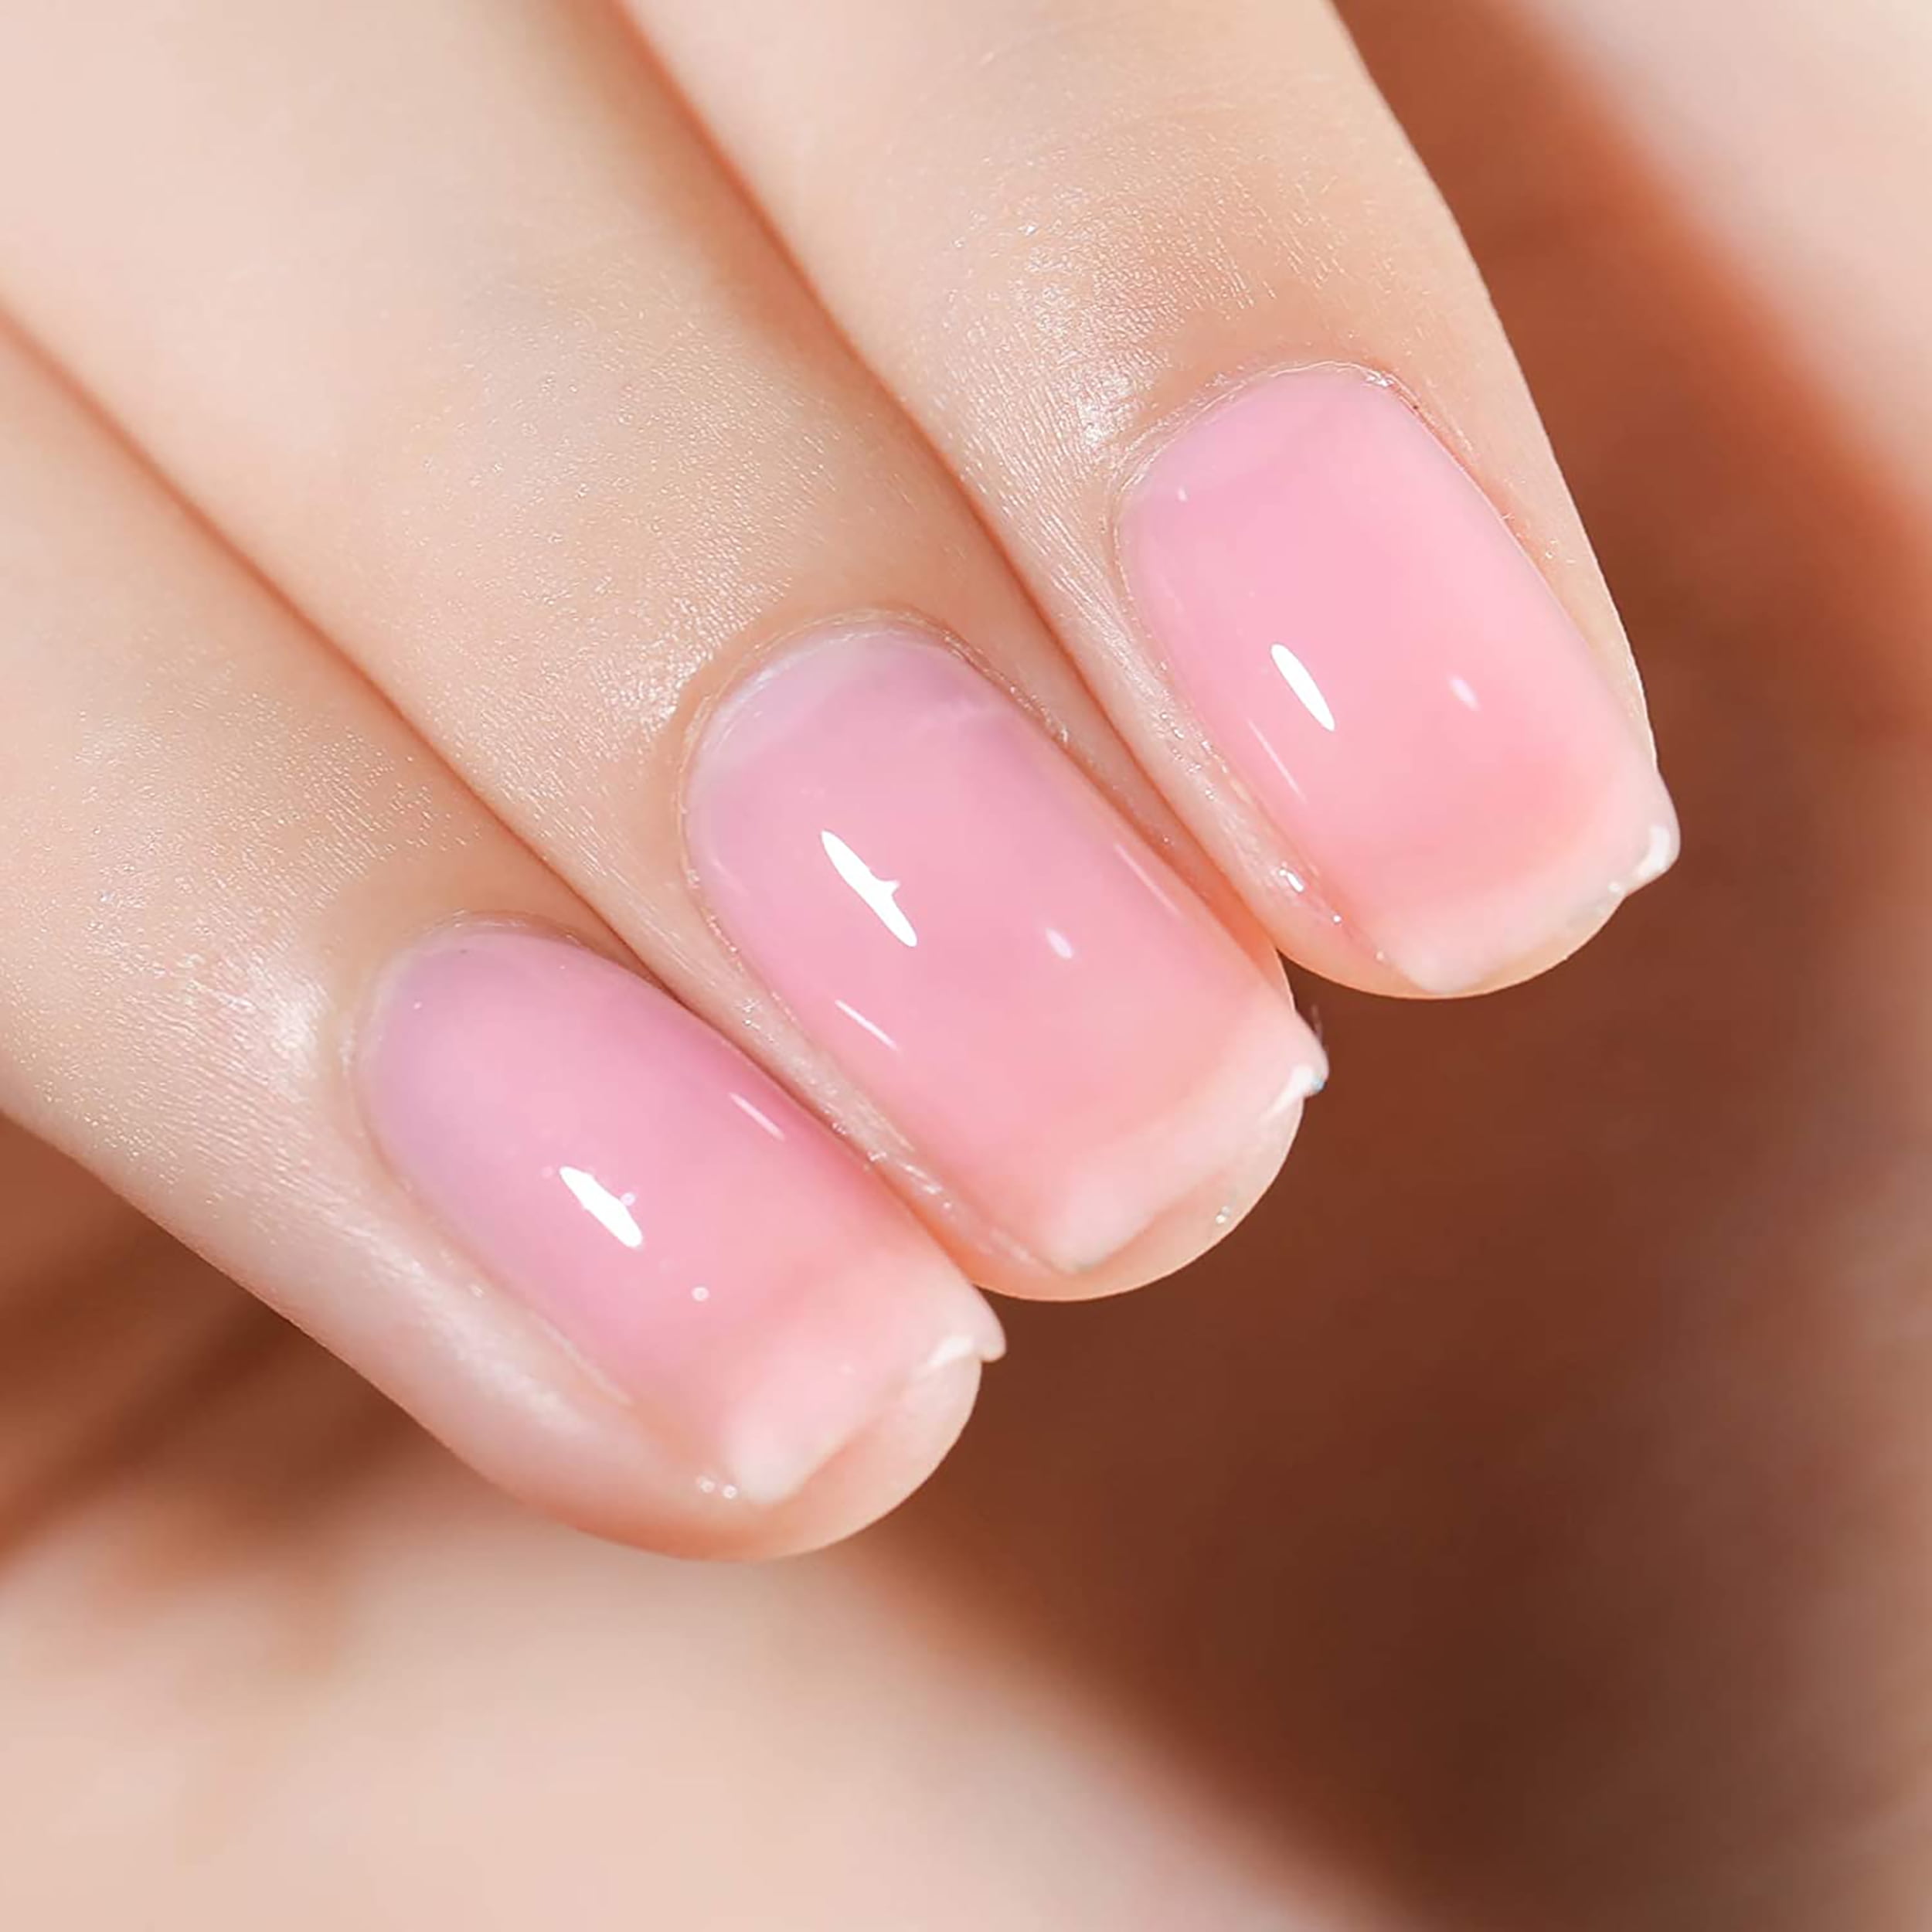 Pin by Mimi Nadutey on Cute nails | Pretty nails, Swag nails, Gel nails diy